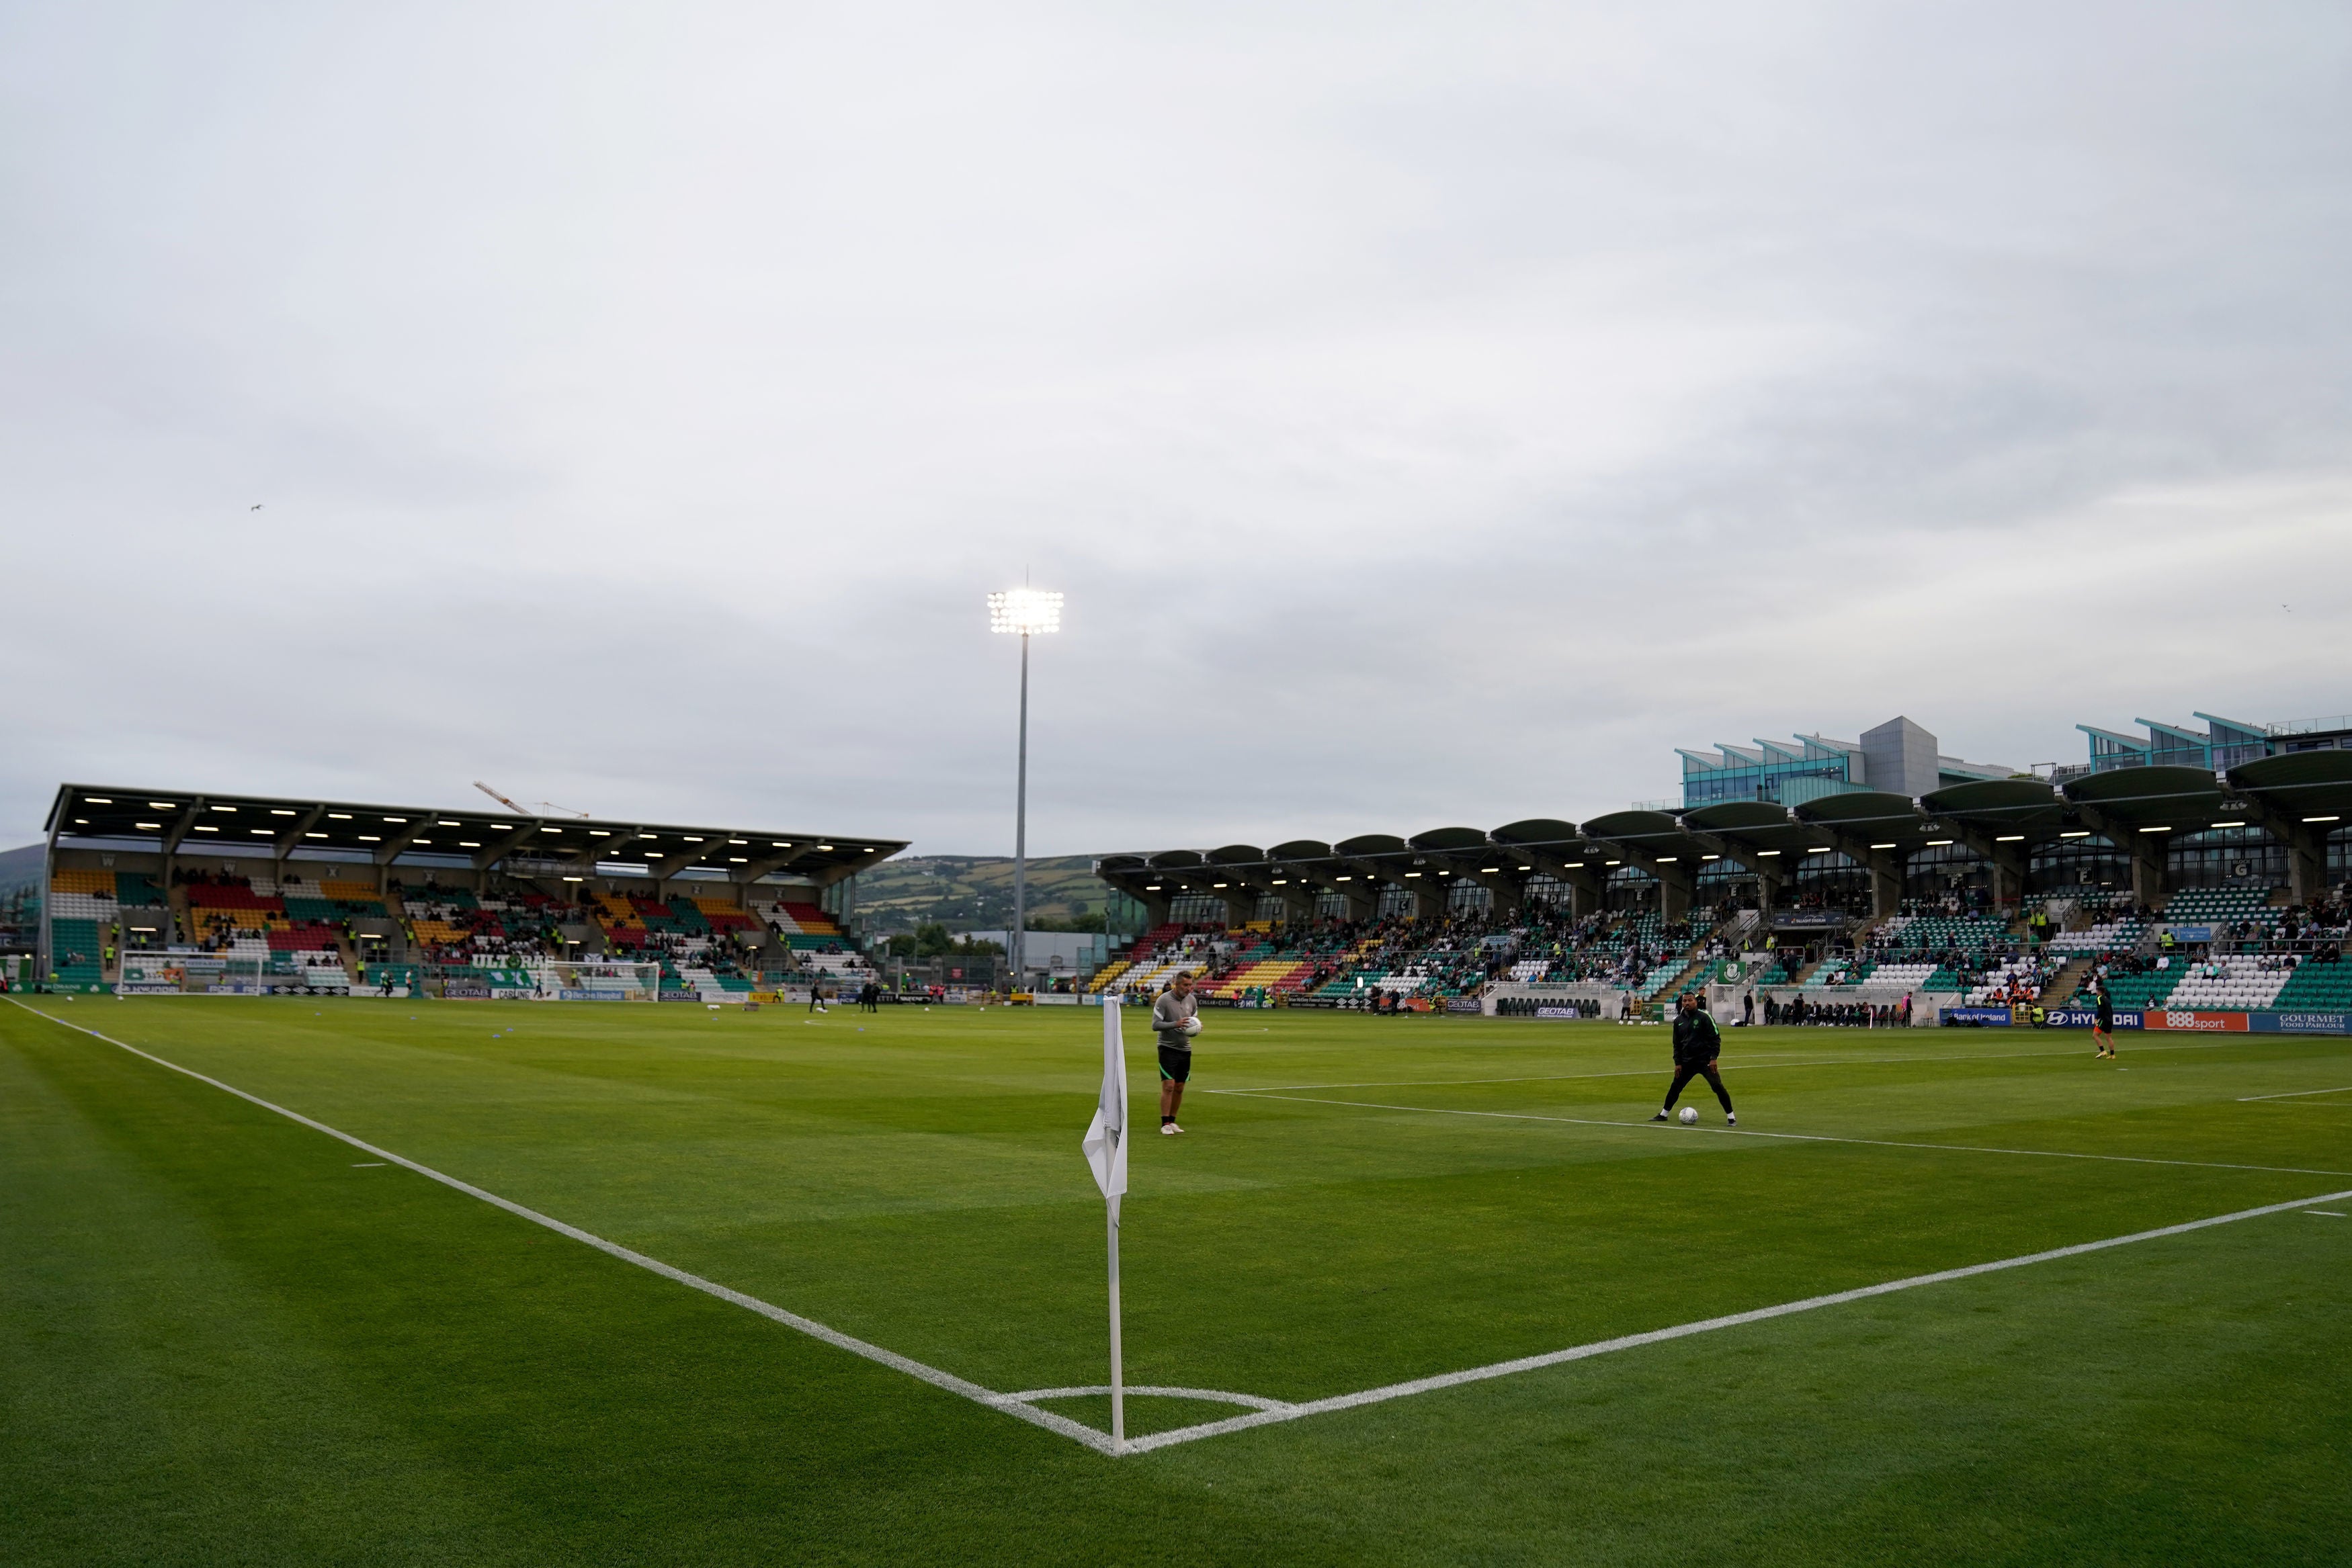 Dublin’s Tallaght stadium, where Shamrock Rovers F.C. play Europa League matches